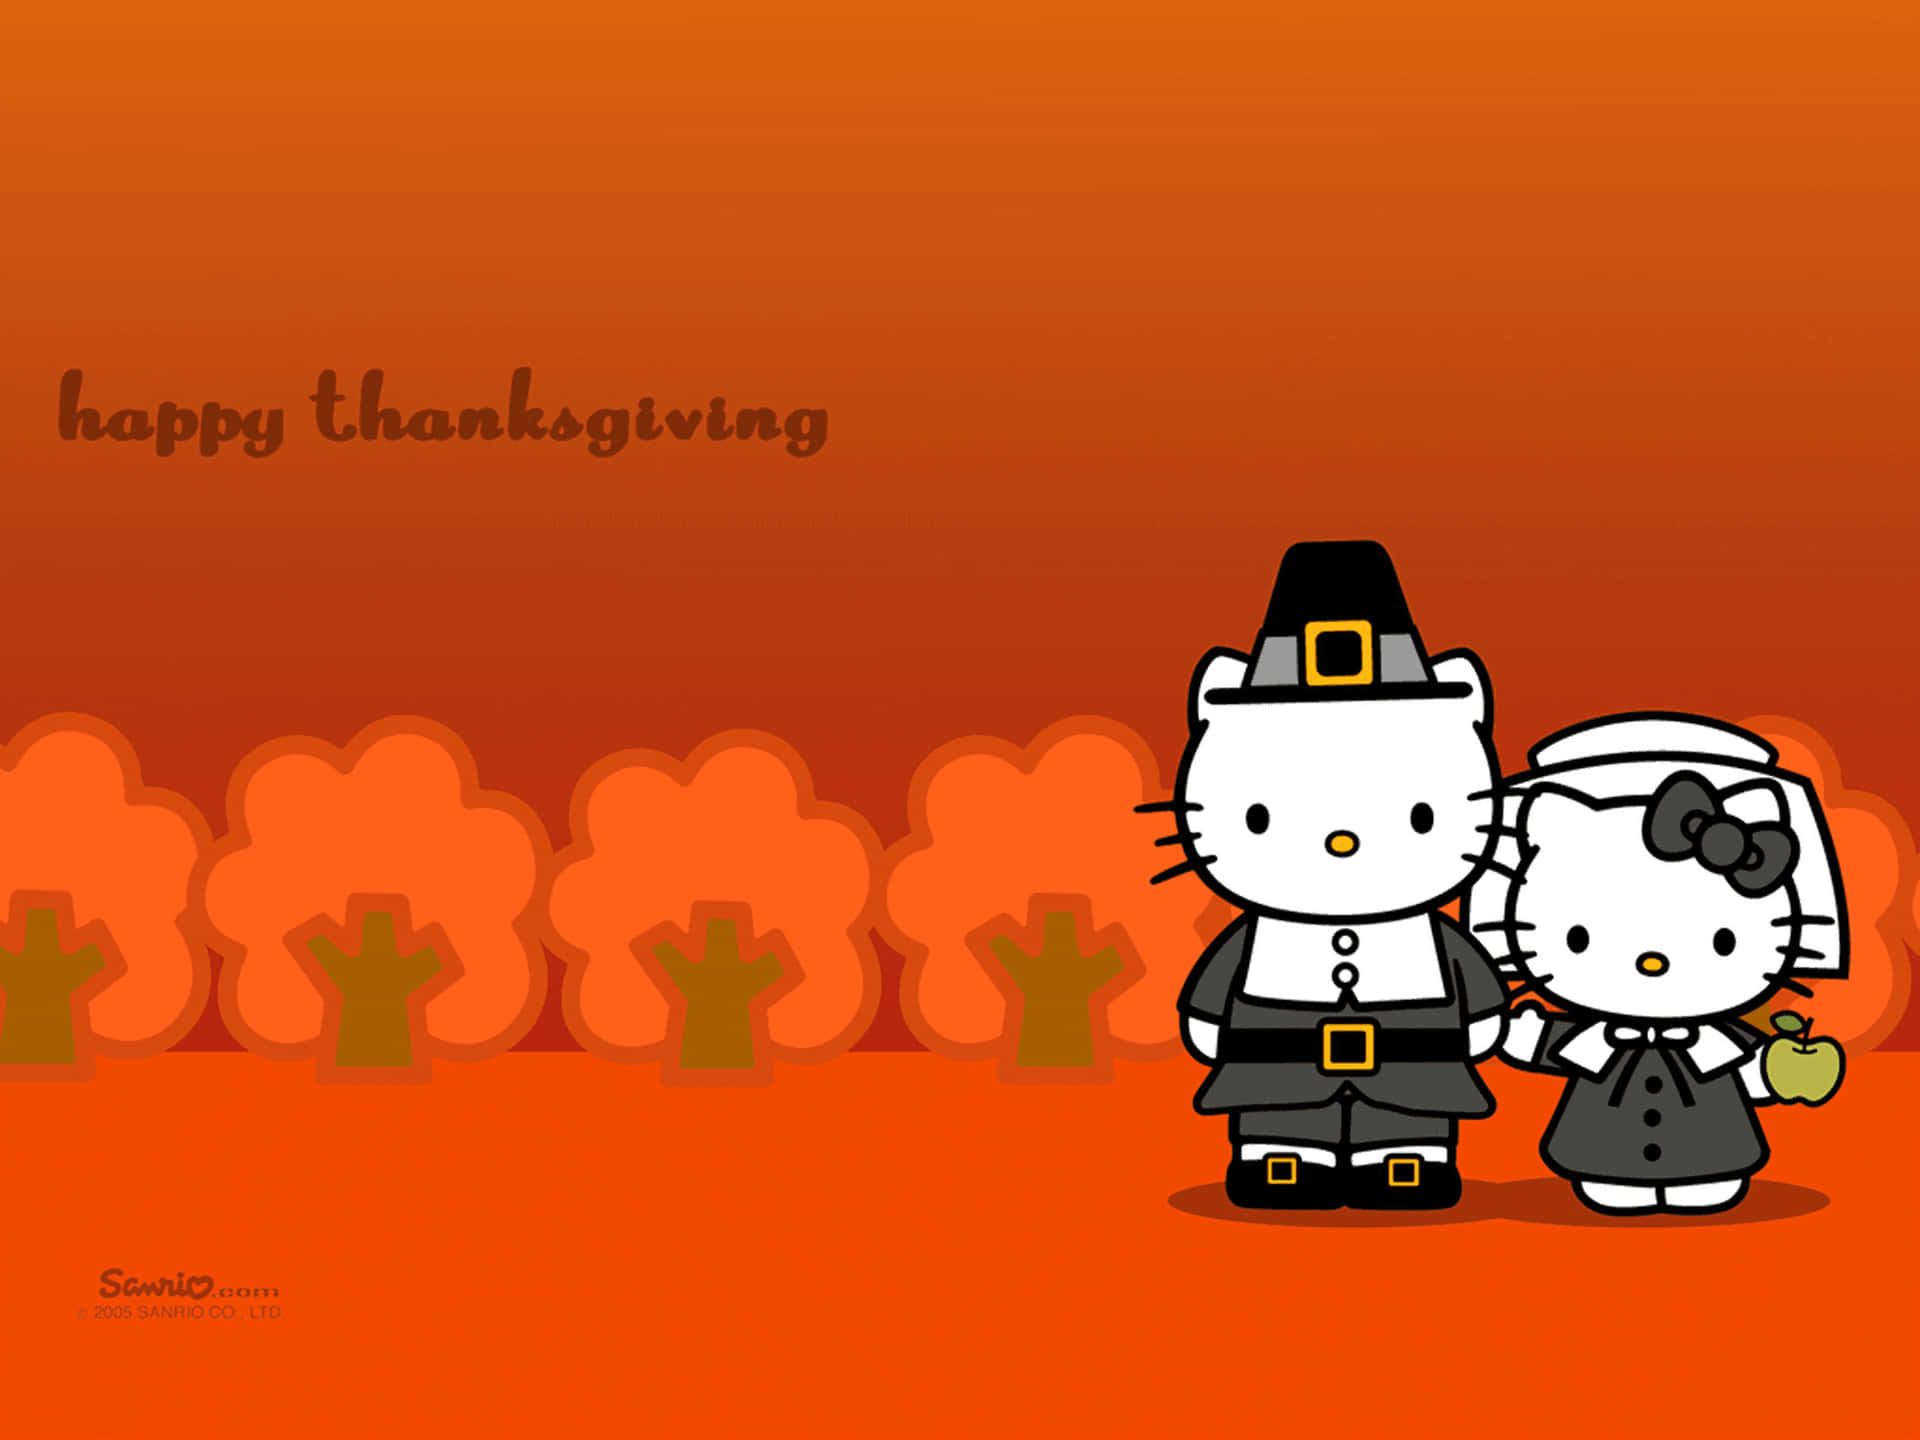 Wishing you a cartoon-filled Thanksgiving! Wallpaper